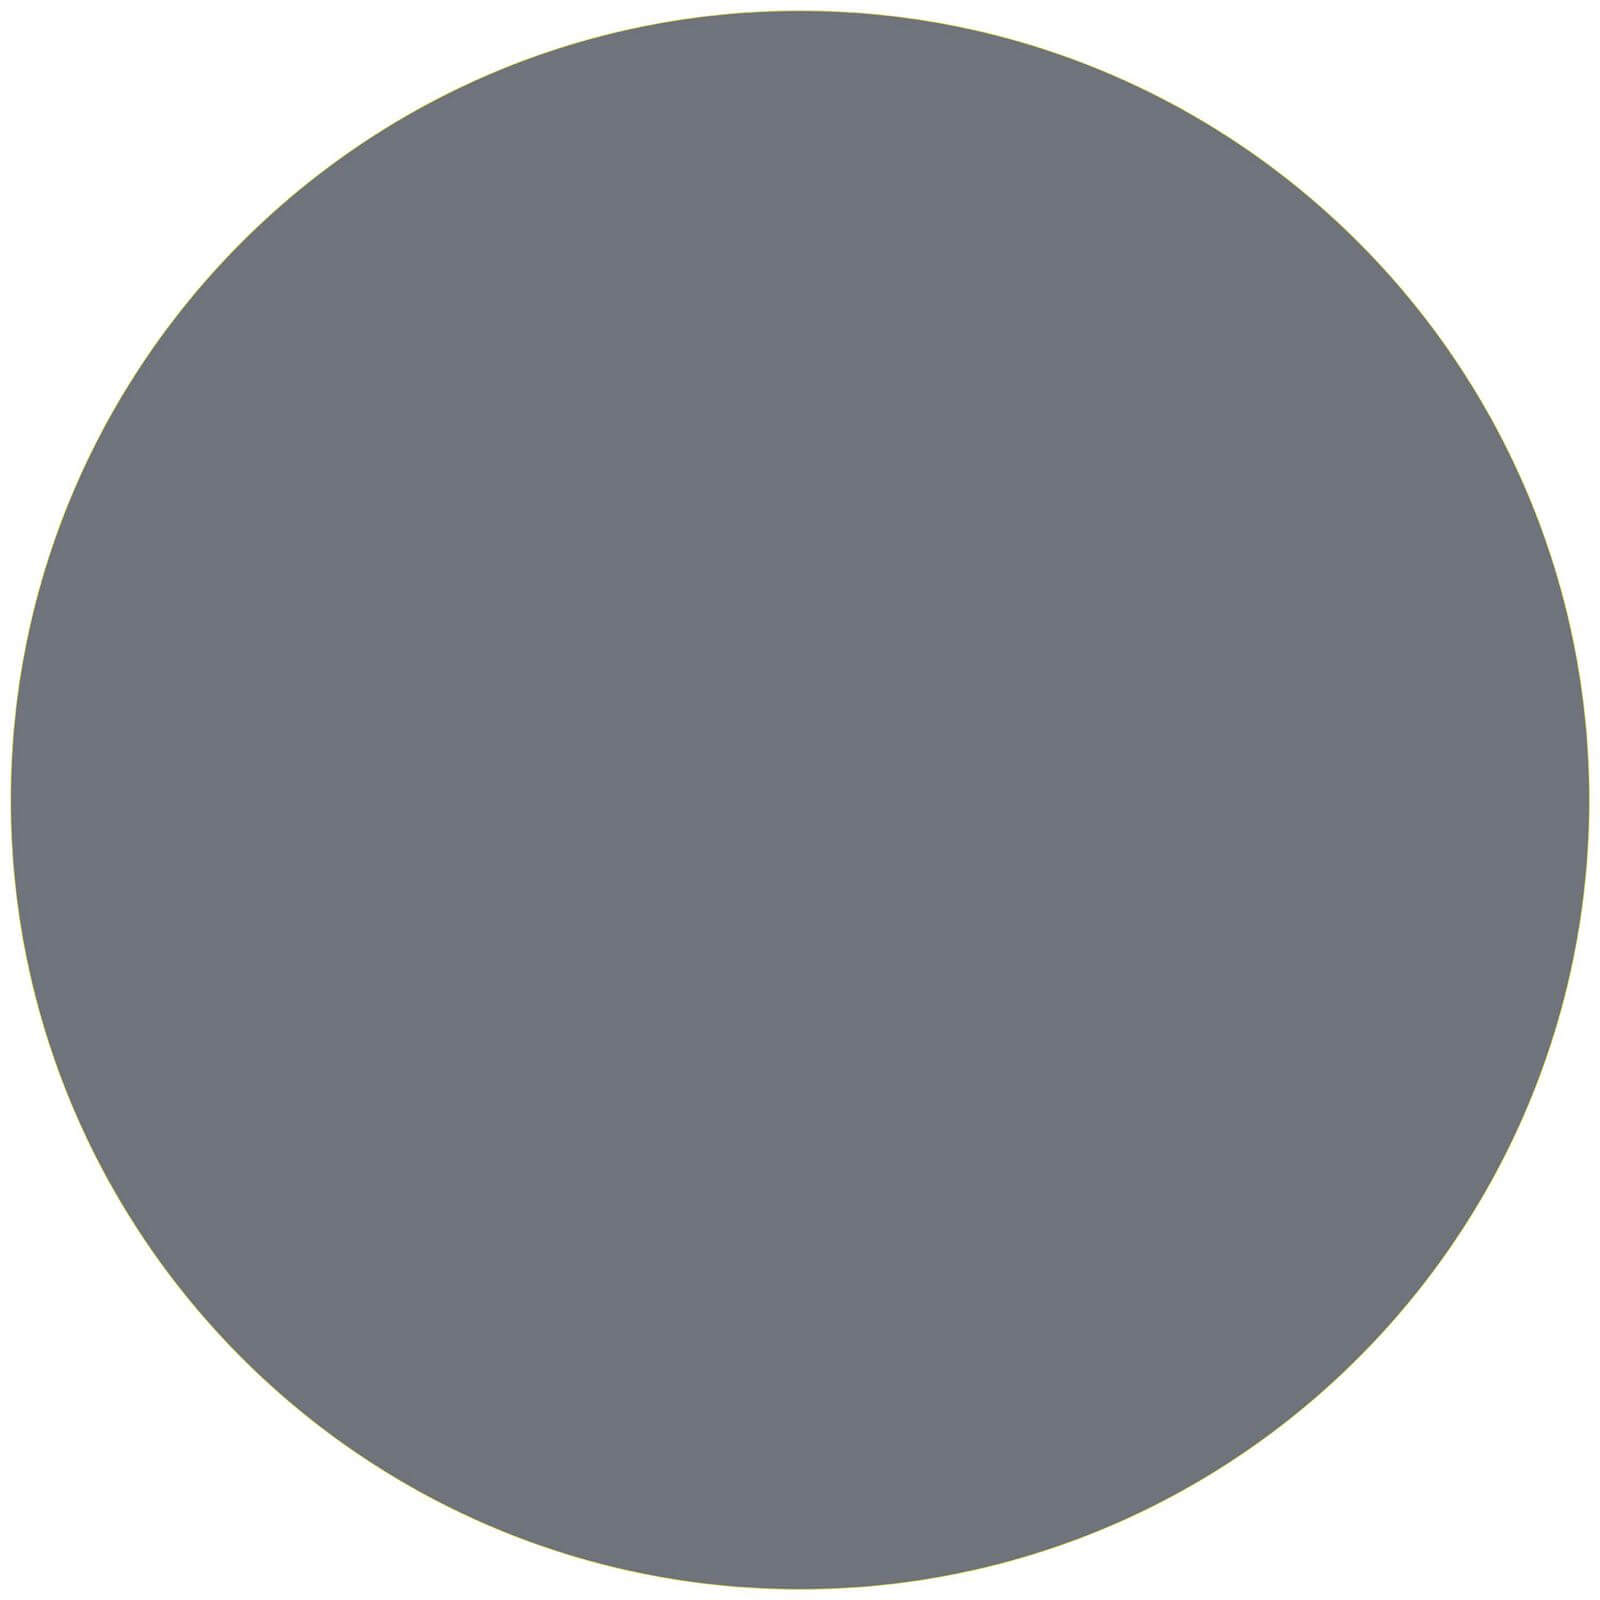 Rust-Oleum Universal Gloss Spray Paint Paint Slate Grey - 400ml